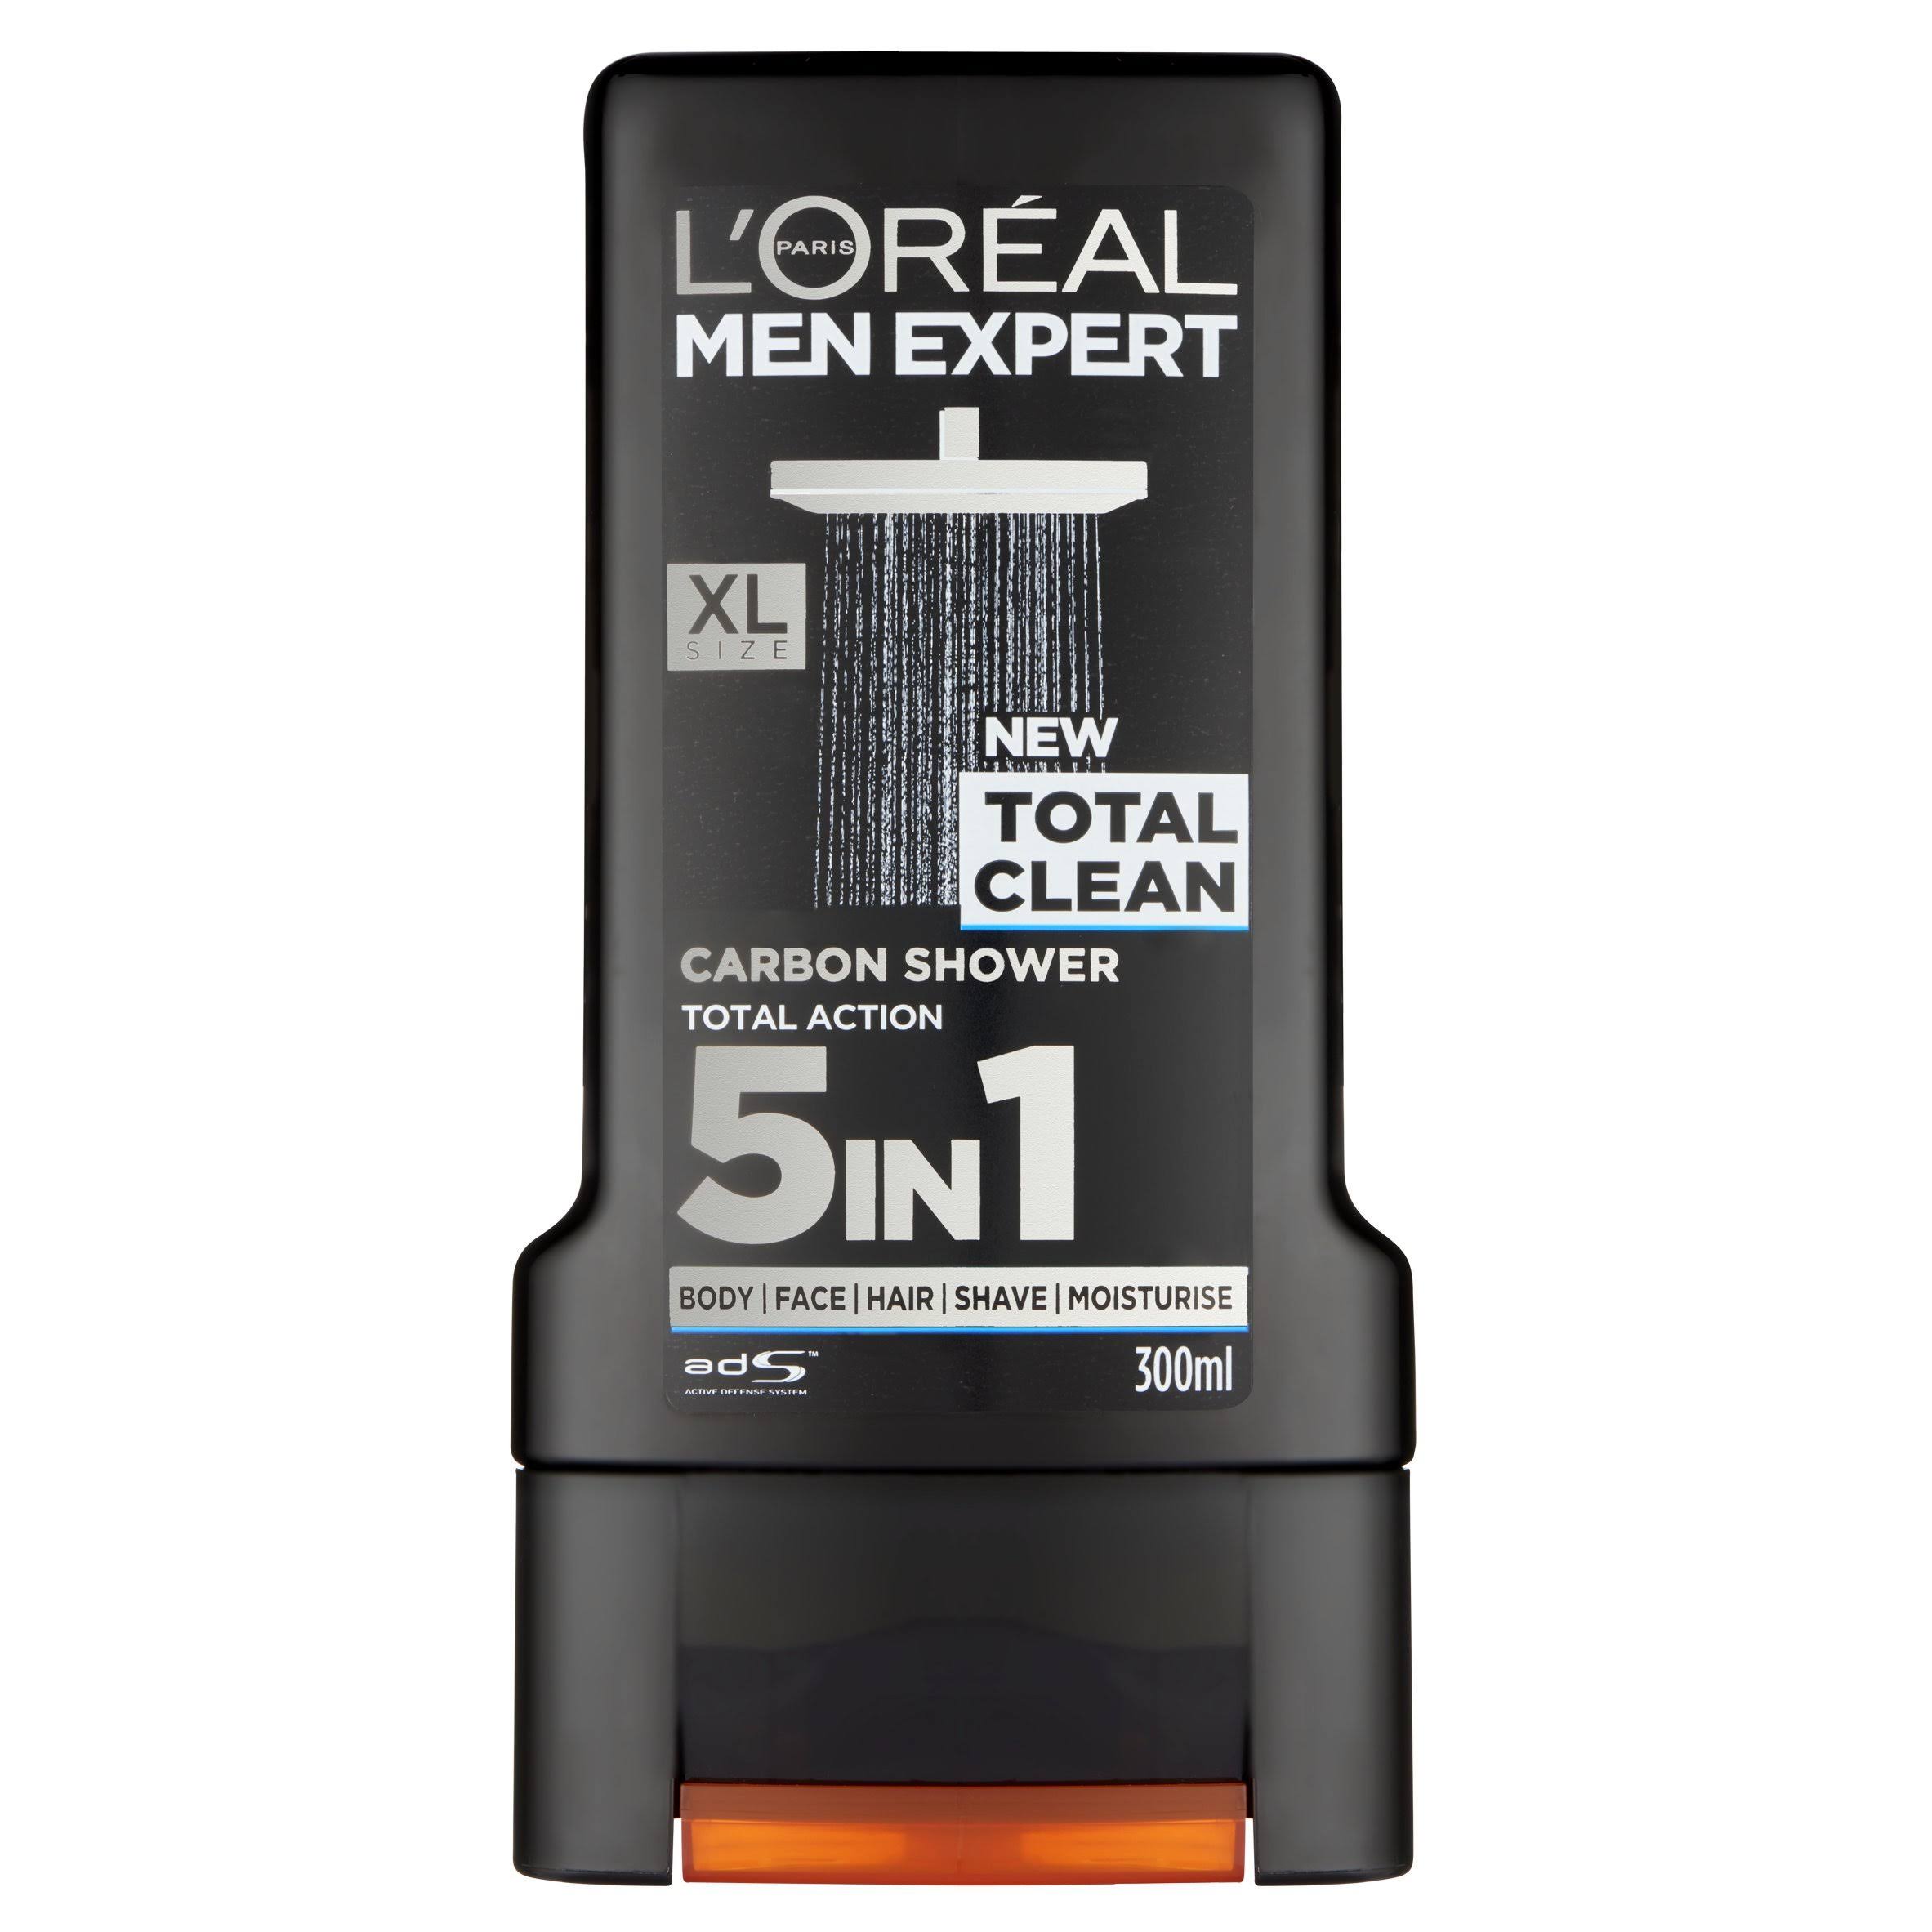 L'Oreal Men Expert Total Clean Shower Gel 300ml